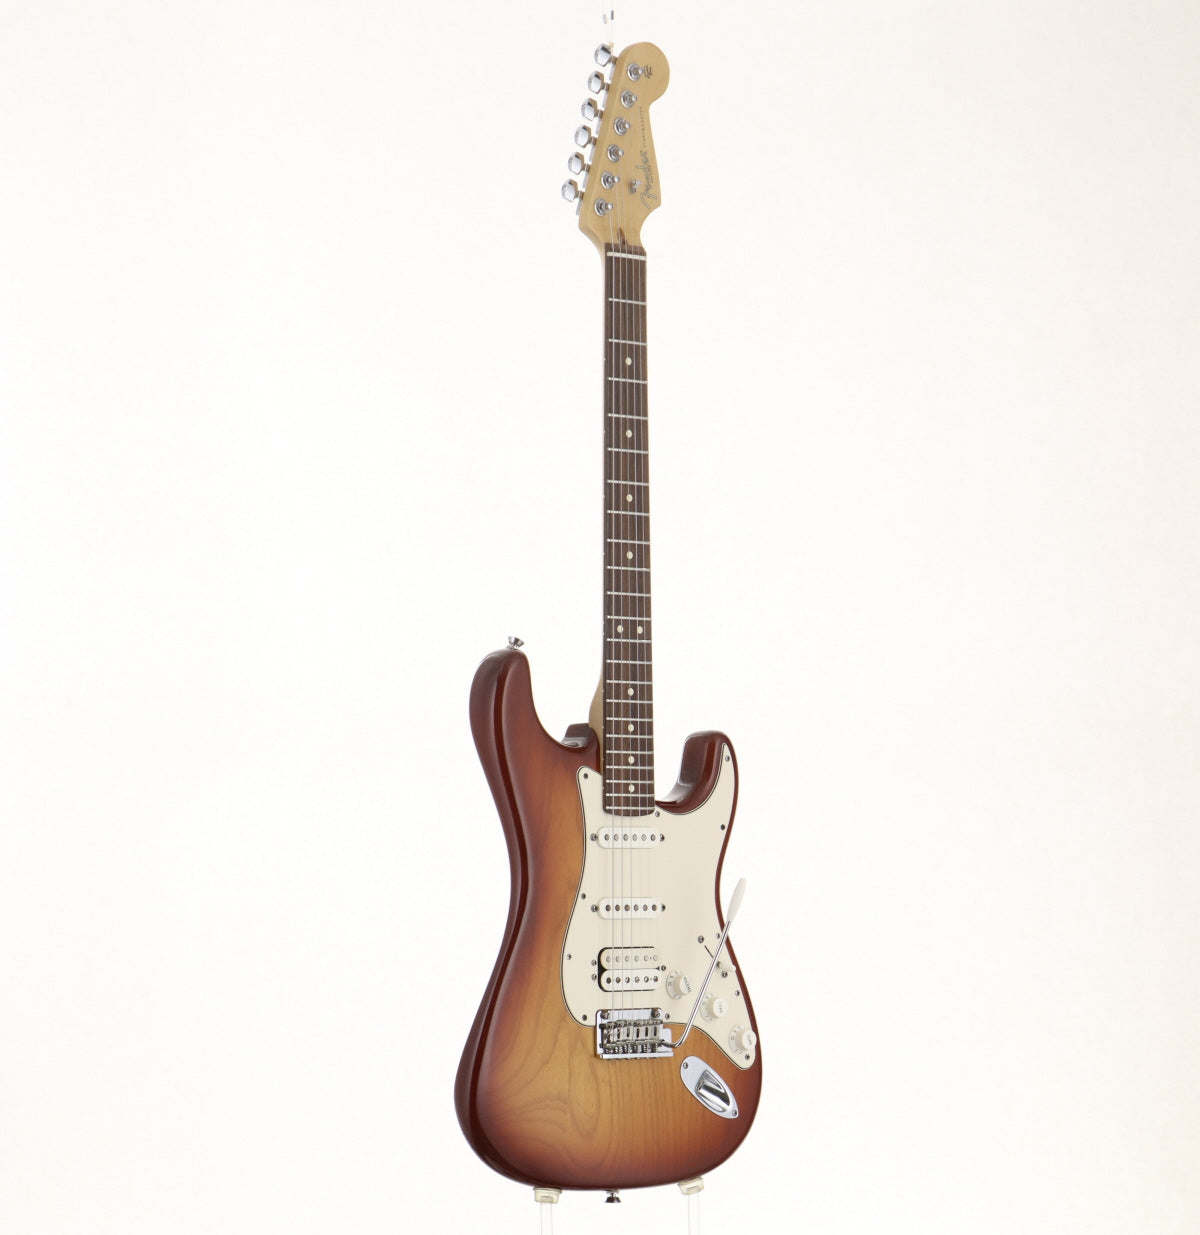 [SN US11118966] USED Fender / American Standard Stratocaster HSS Sienna Sunburst Rosewood Fingerboard [09]